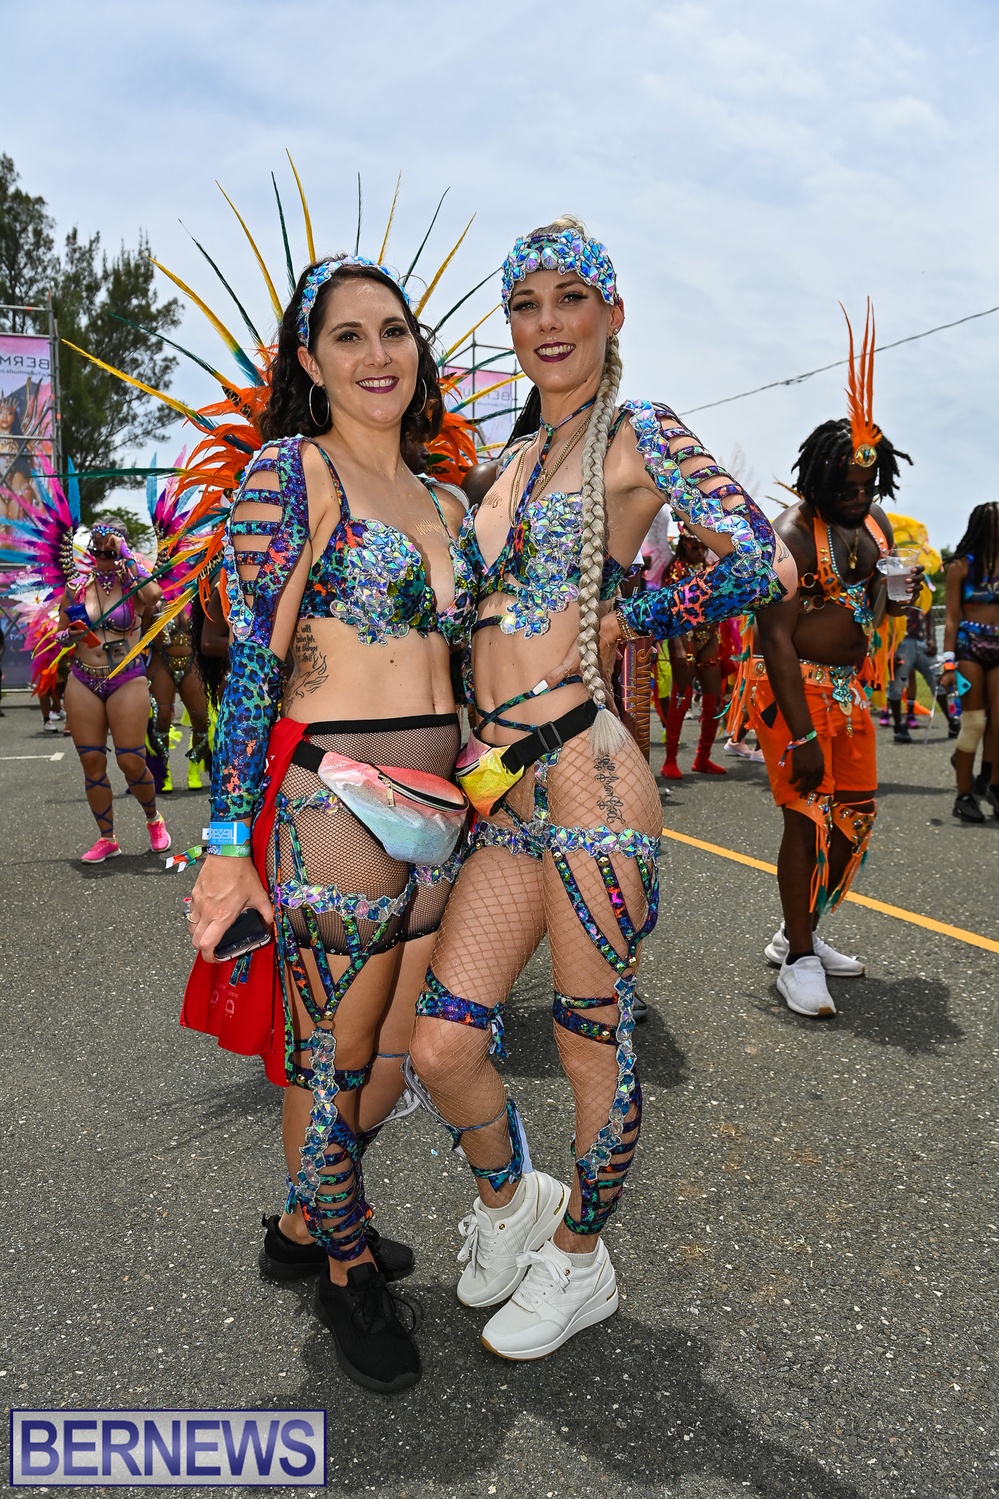 Carnival in Bermuda ‘Revel de Road’ event  party June 2022 AW (44)